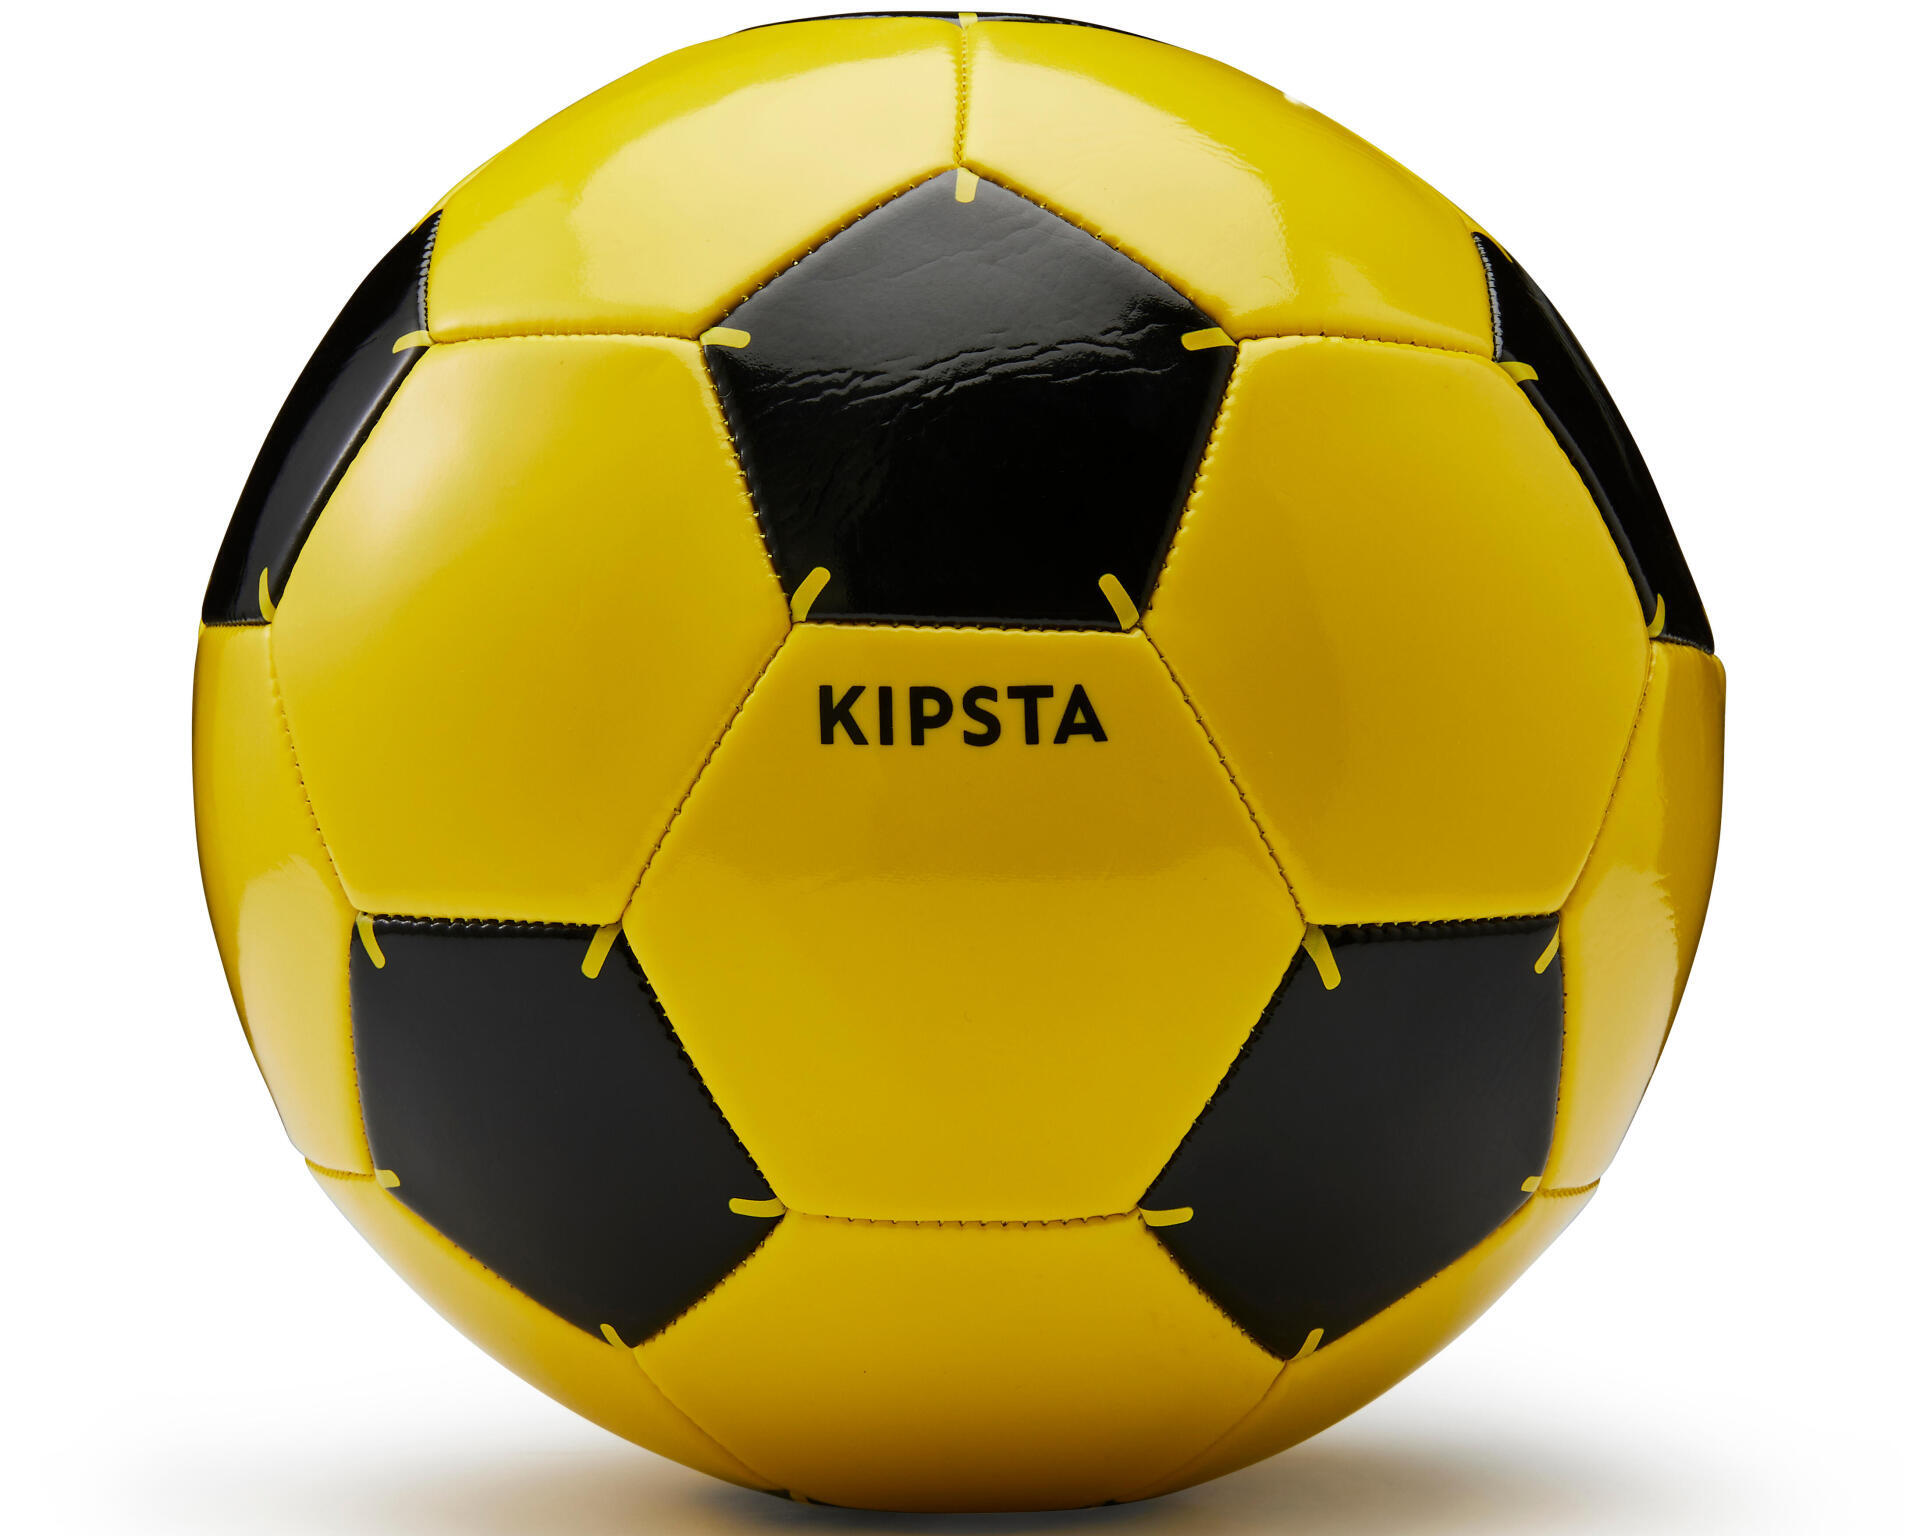 Kipsta First Kick S5